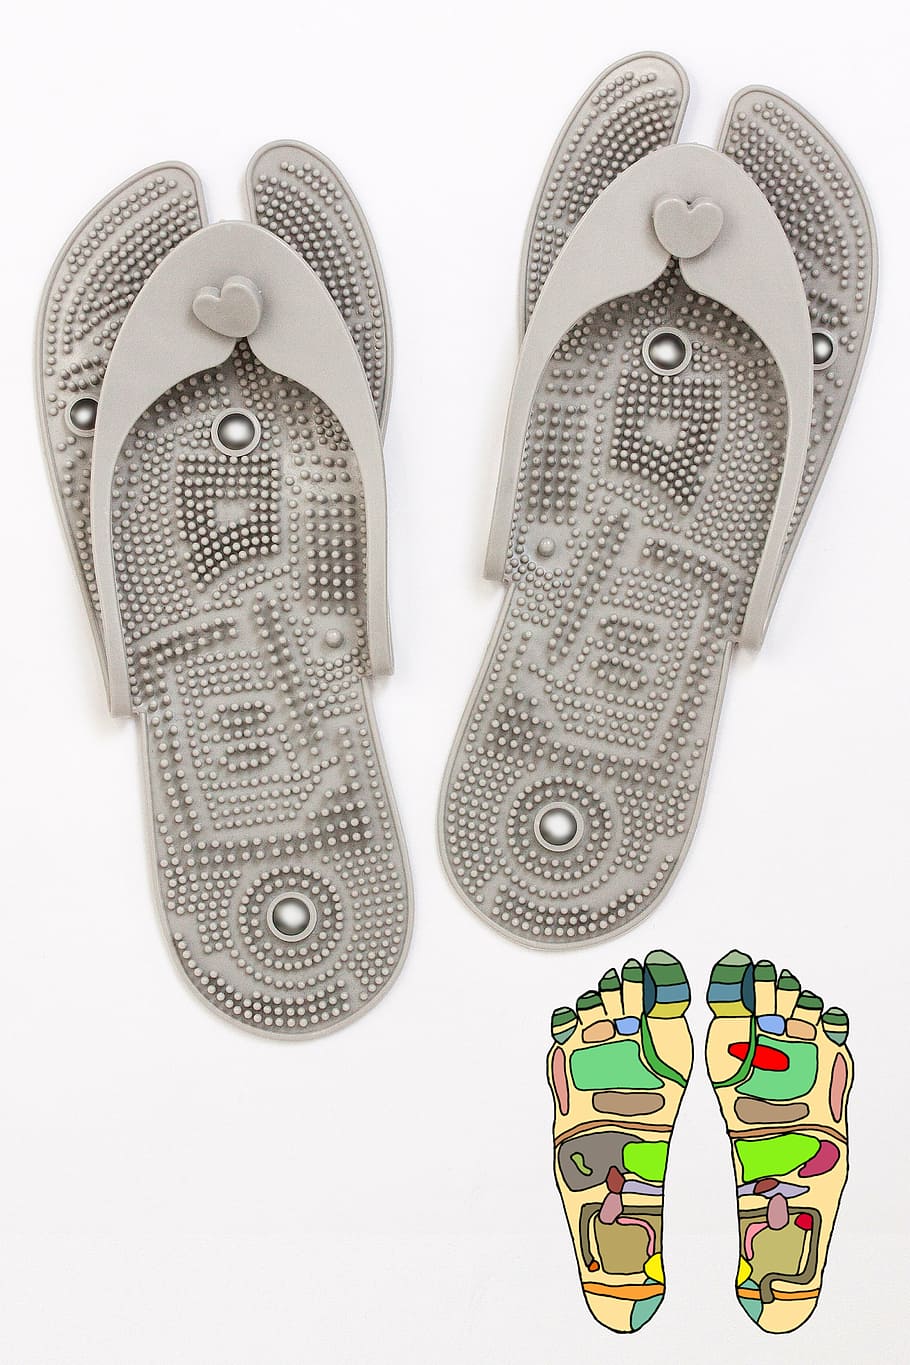 pair of gray flip-flops, flip flops, shoes, reflex zone massage